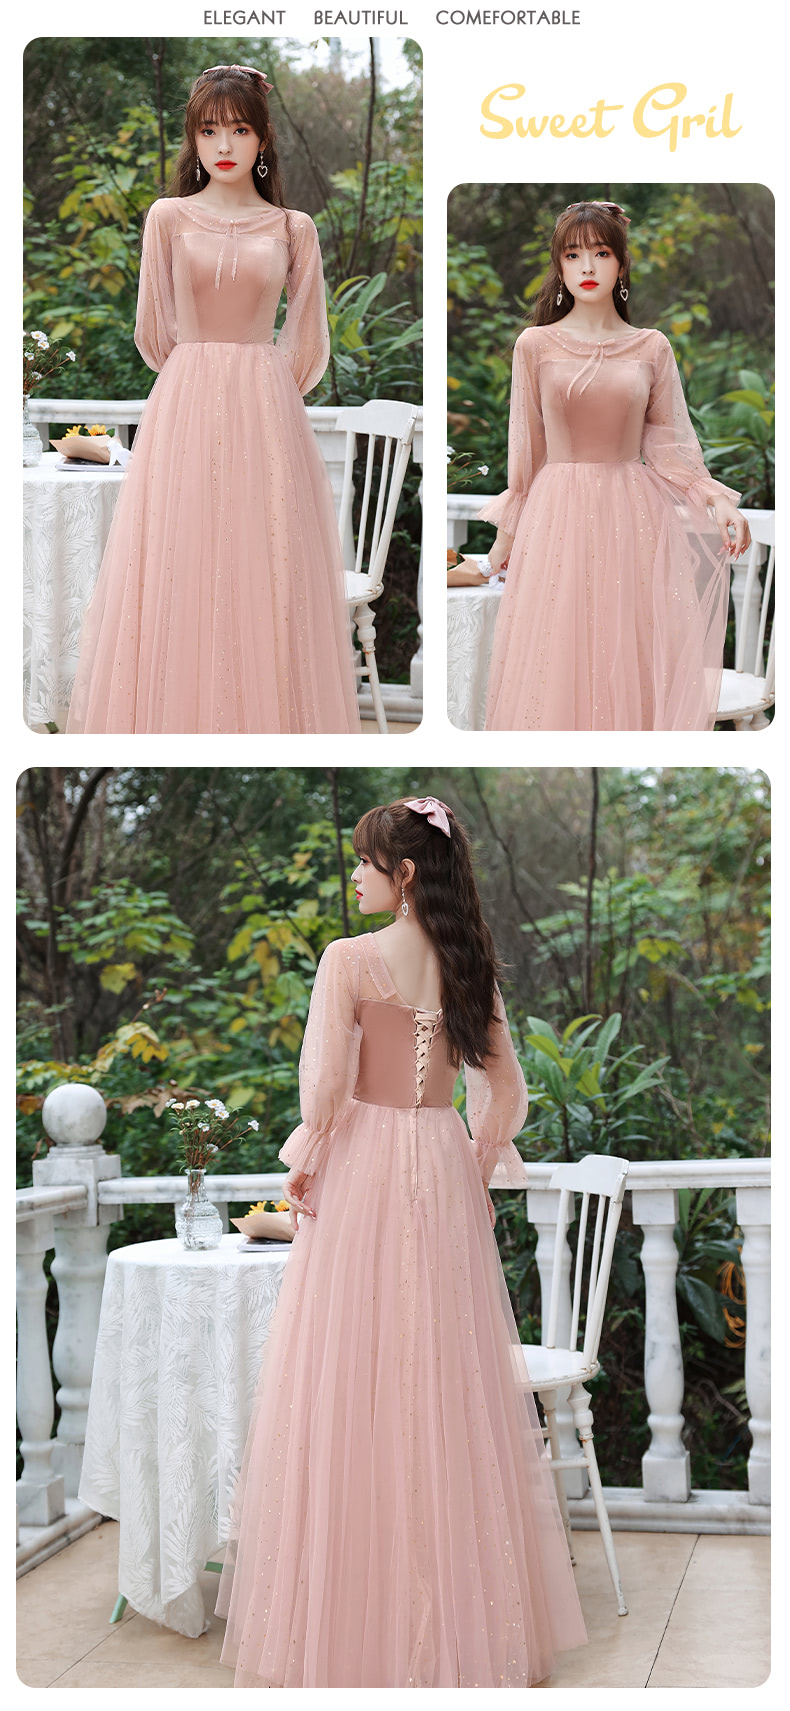 Long-Sleeve-Velvet-Bridesmaid-Dress-Wedding-Guest-Formal-Gown21.jpg